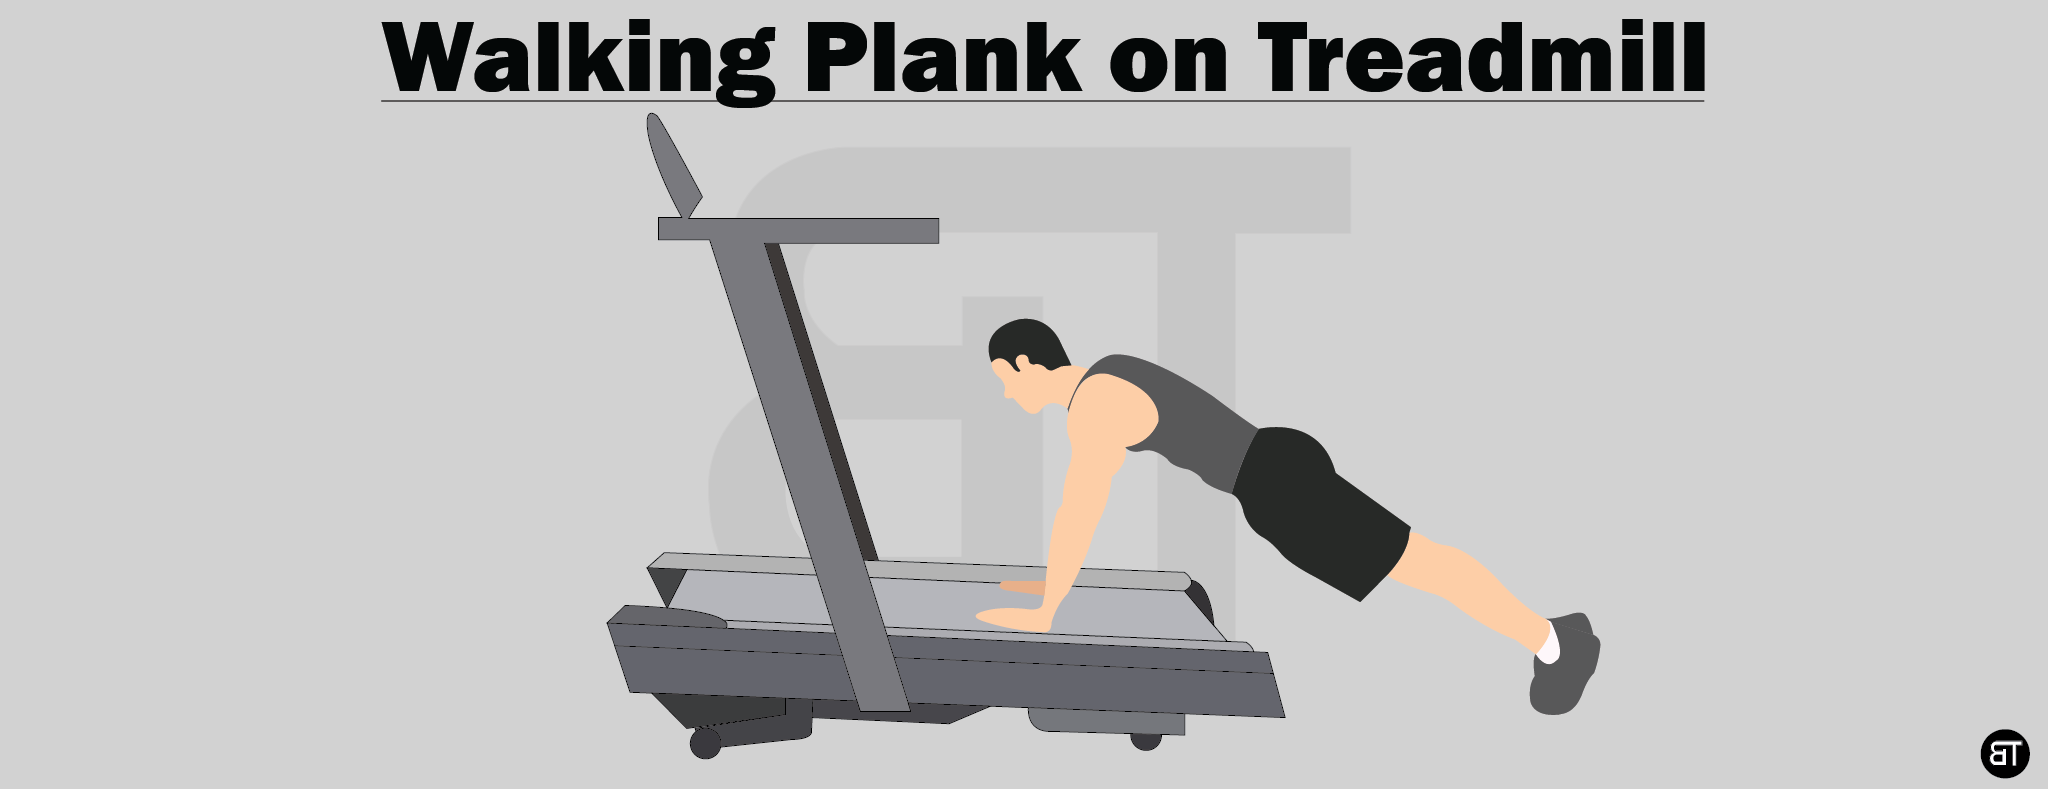 Walking Plank on Treadmill